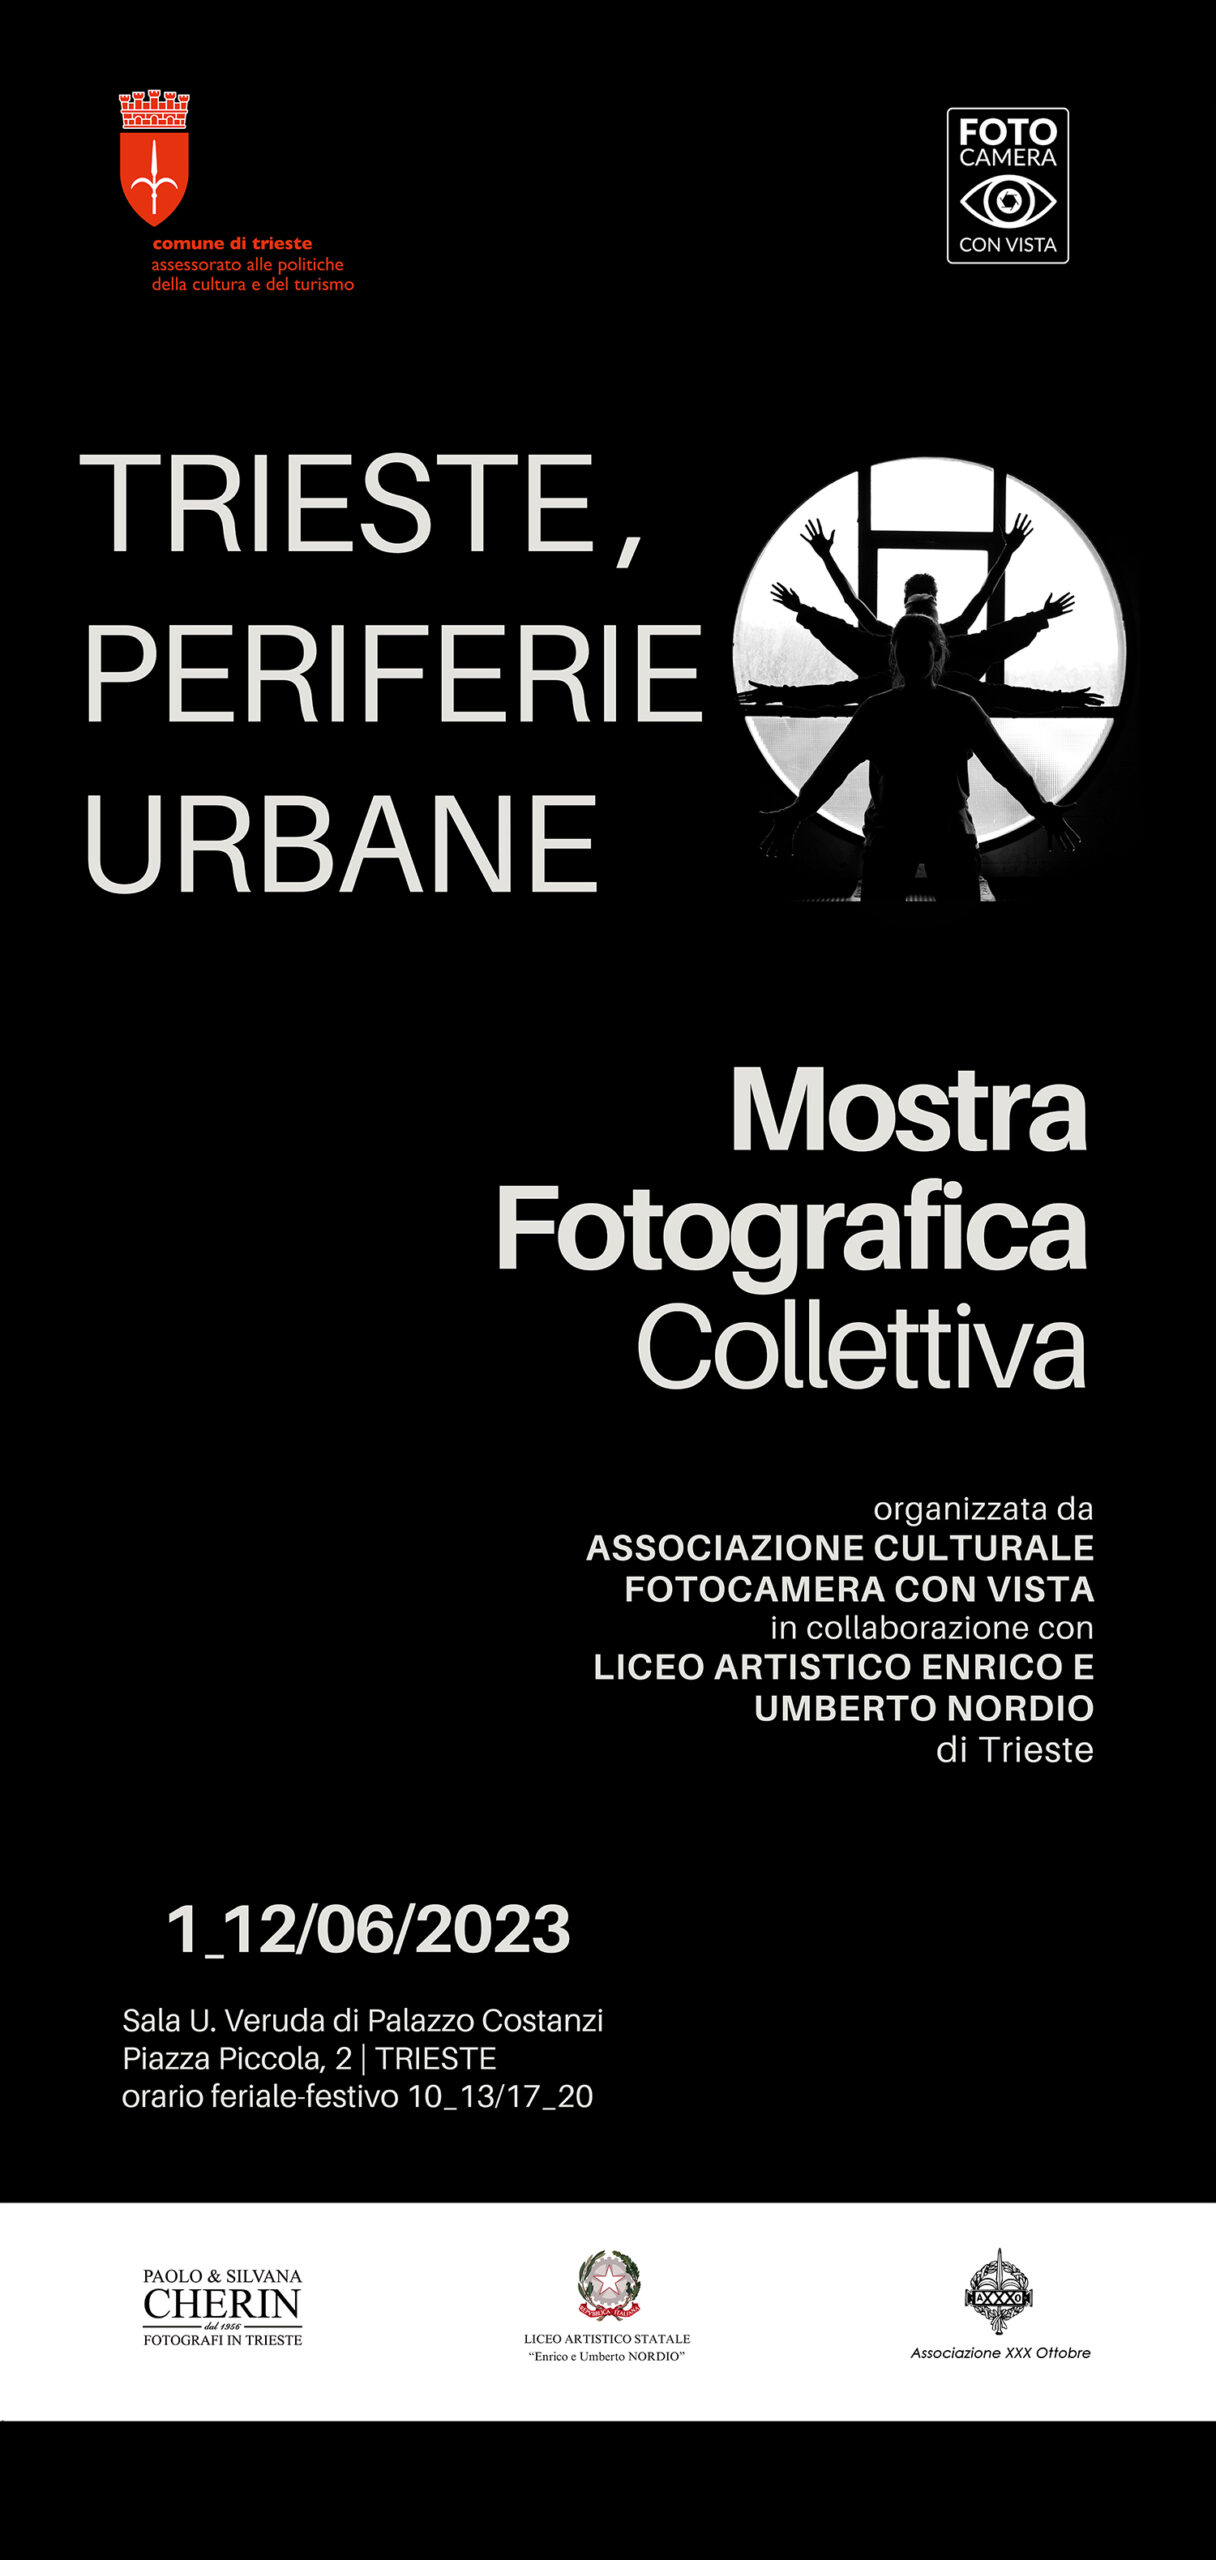 Mostra fotografica “Trieste, periferie urbane”